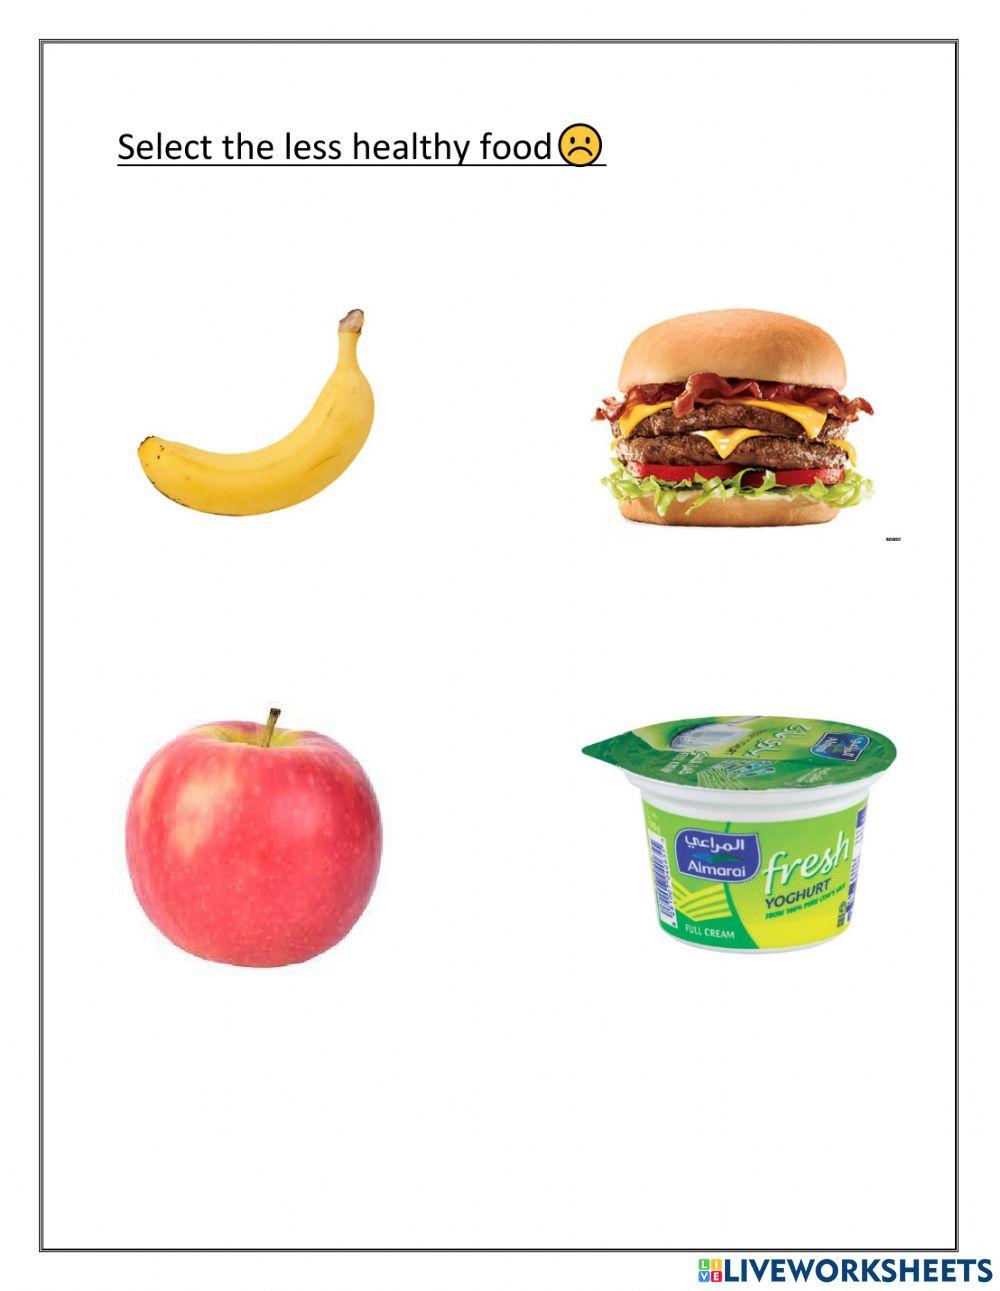 Select less healthy food